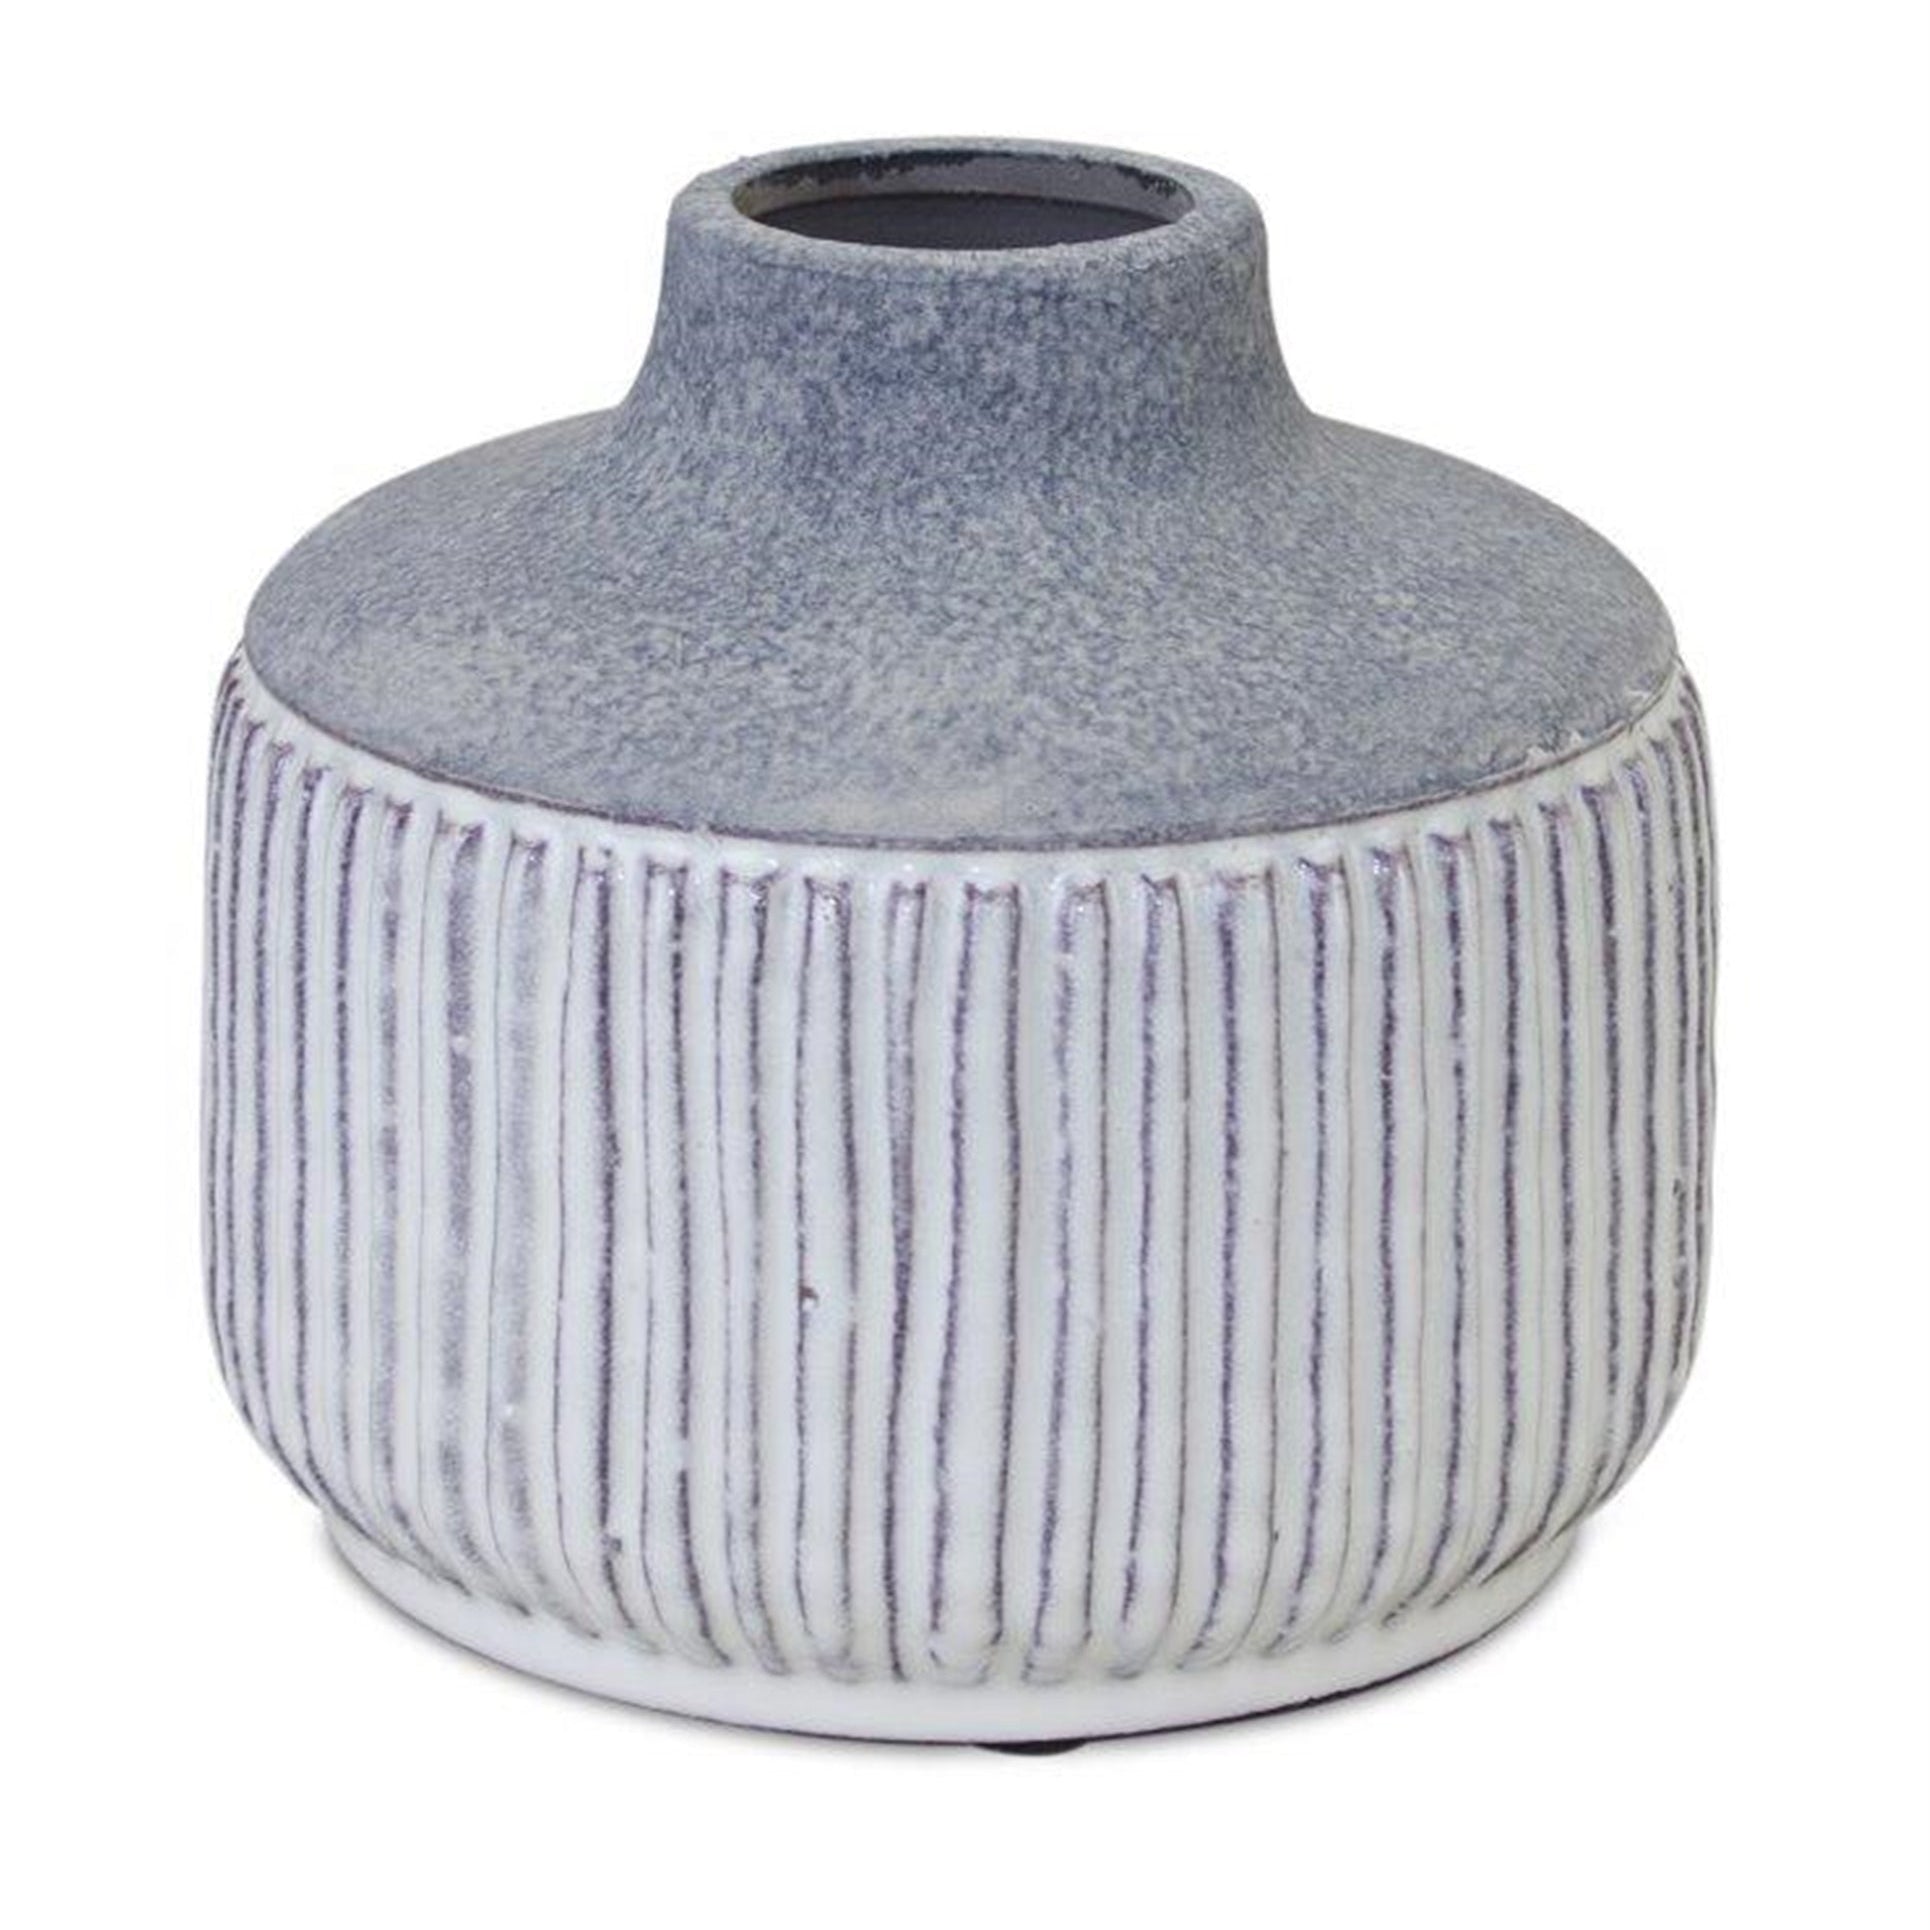 Modern Grey Terra Cotta Vase with Glazed Accent 6"H - Vases